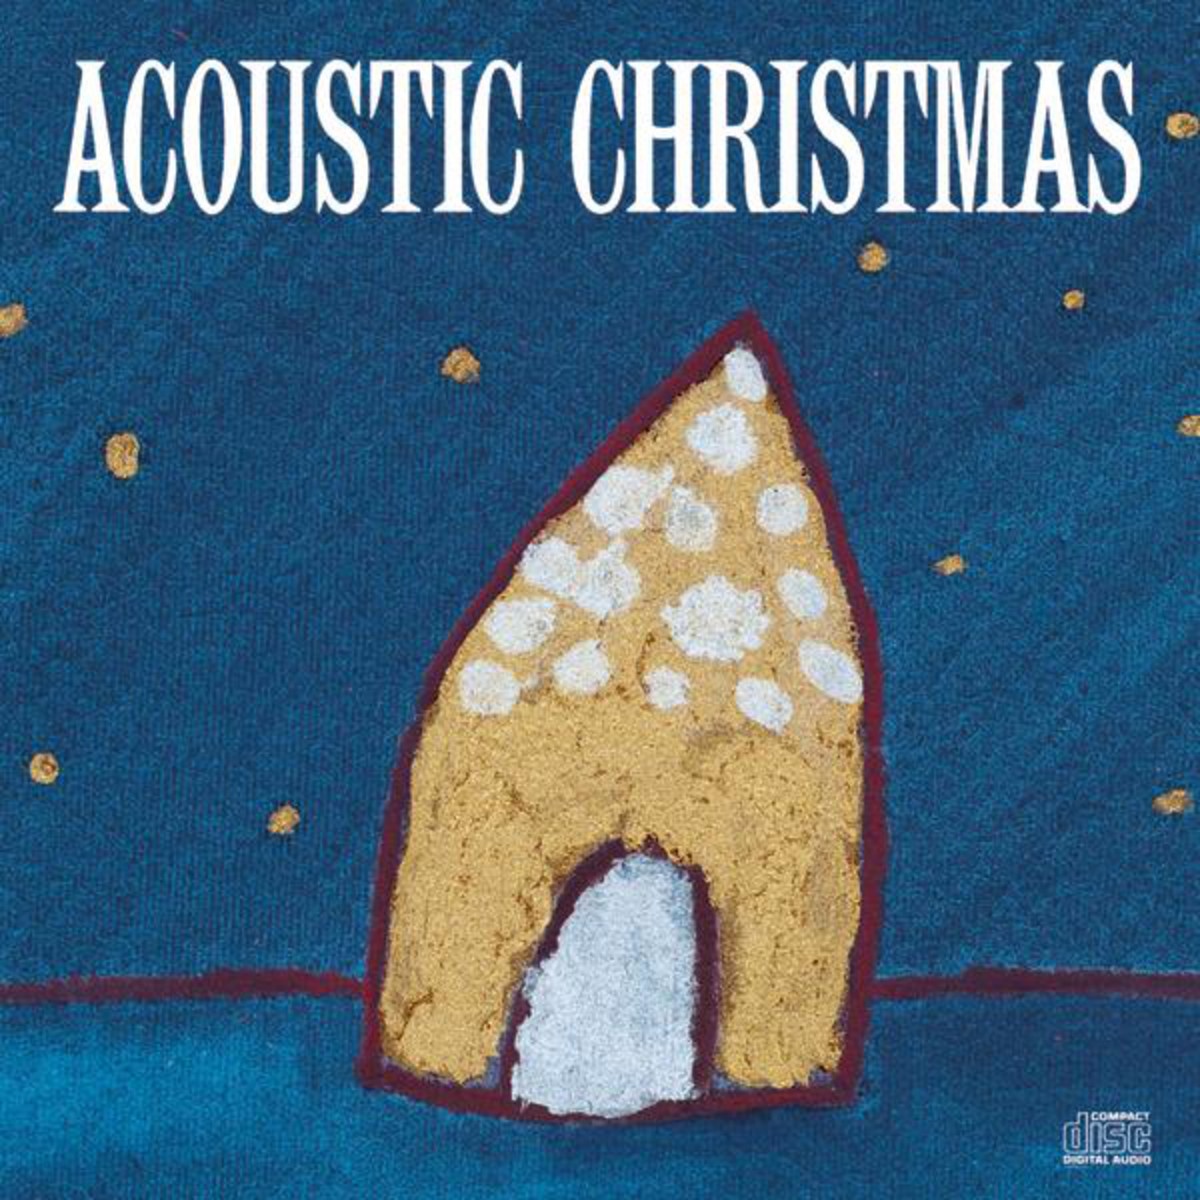 The First Noel (Acoustic Christmas Album Version) - unplug